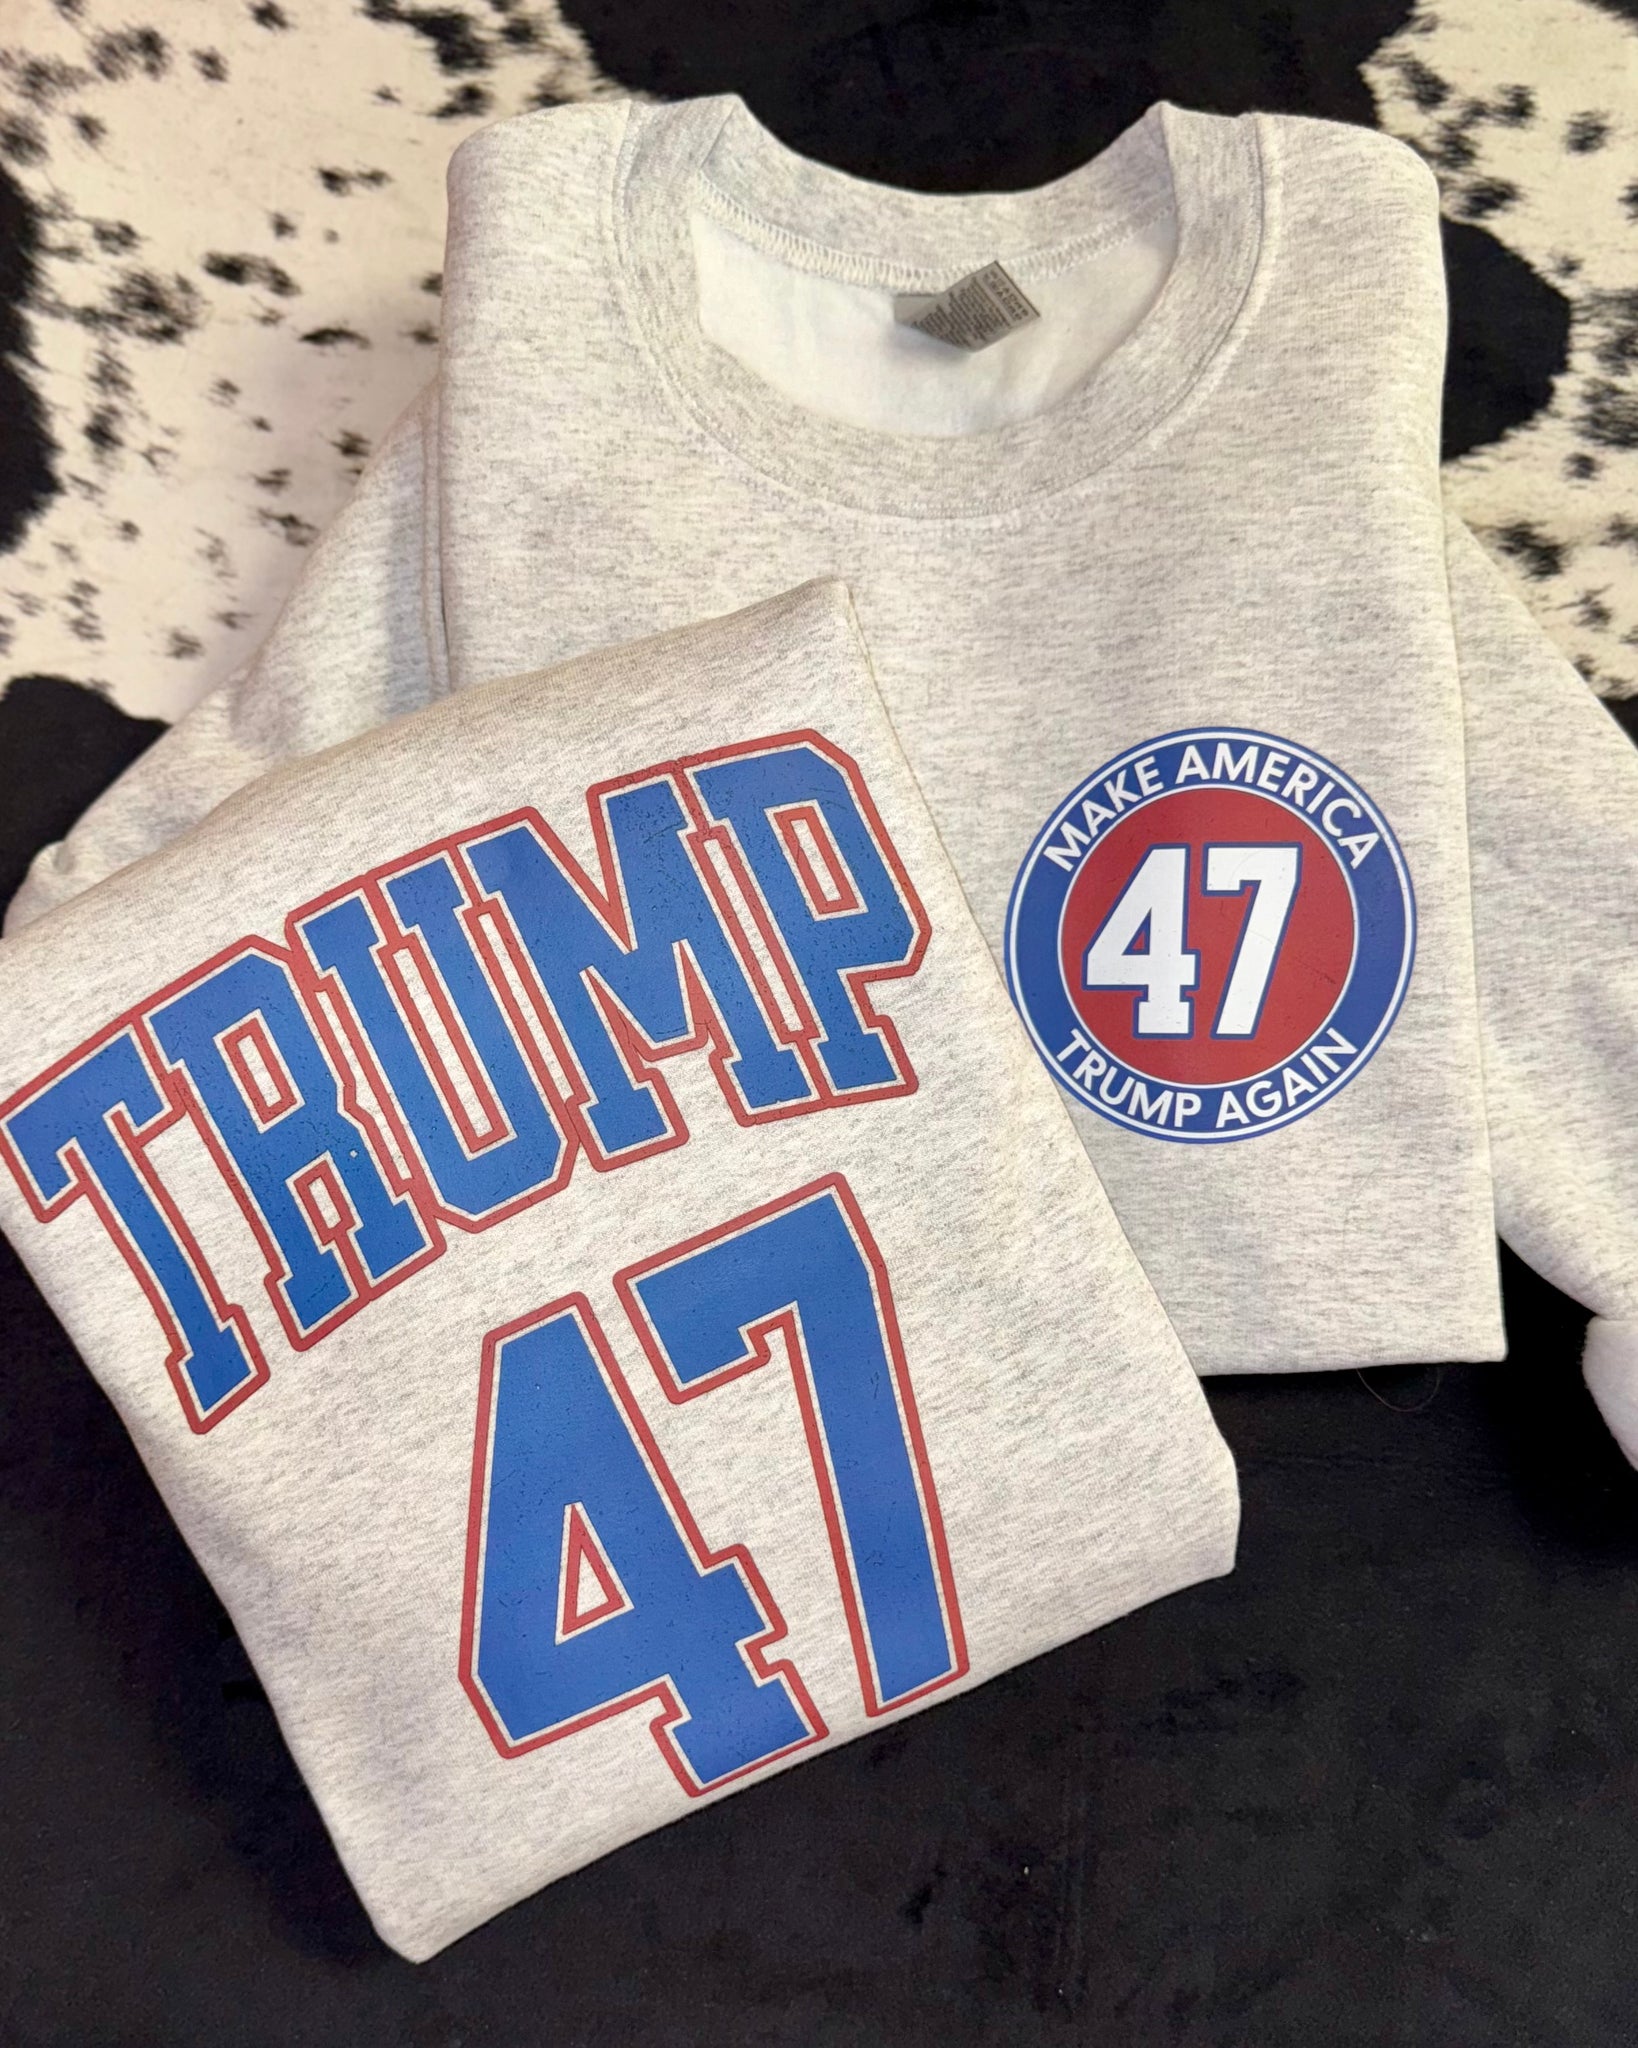 Make America Trump Sweatshirt